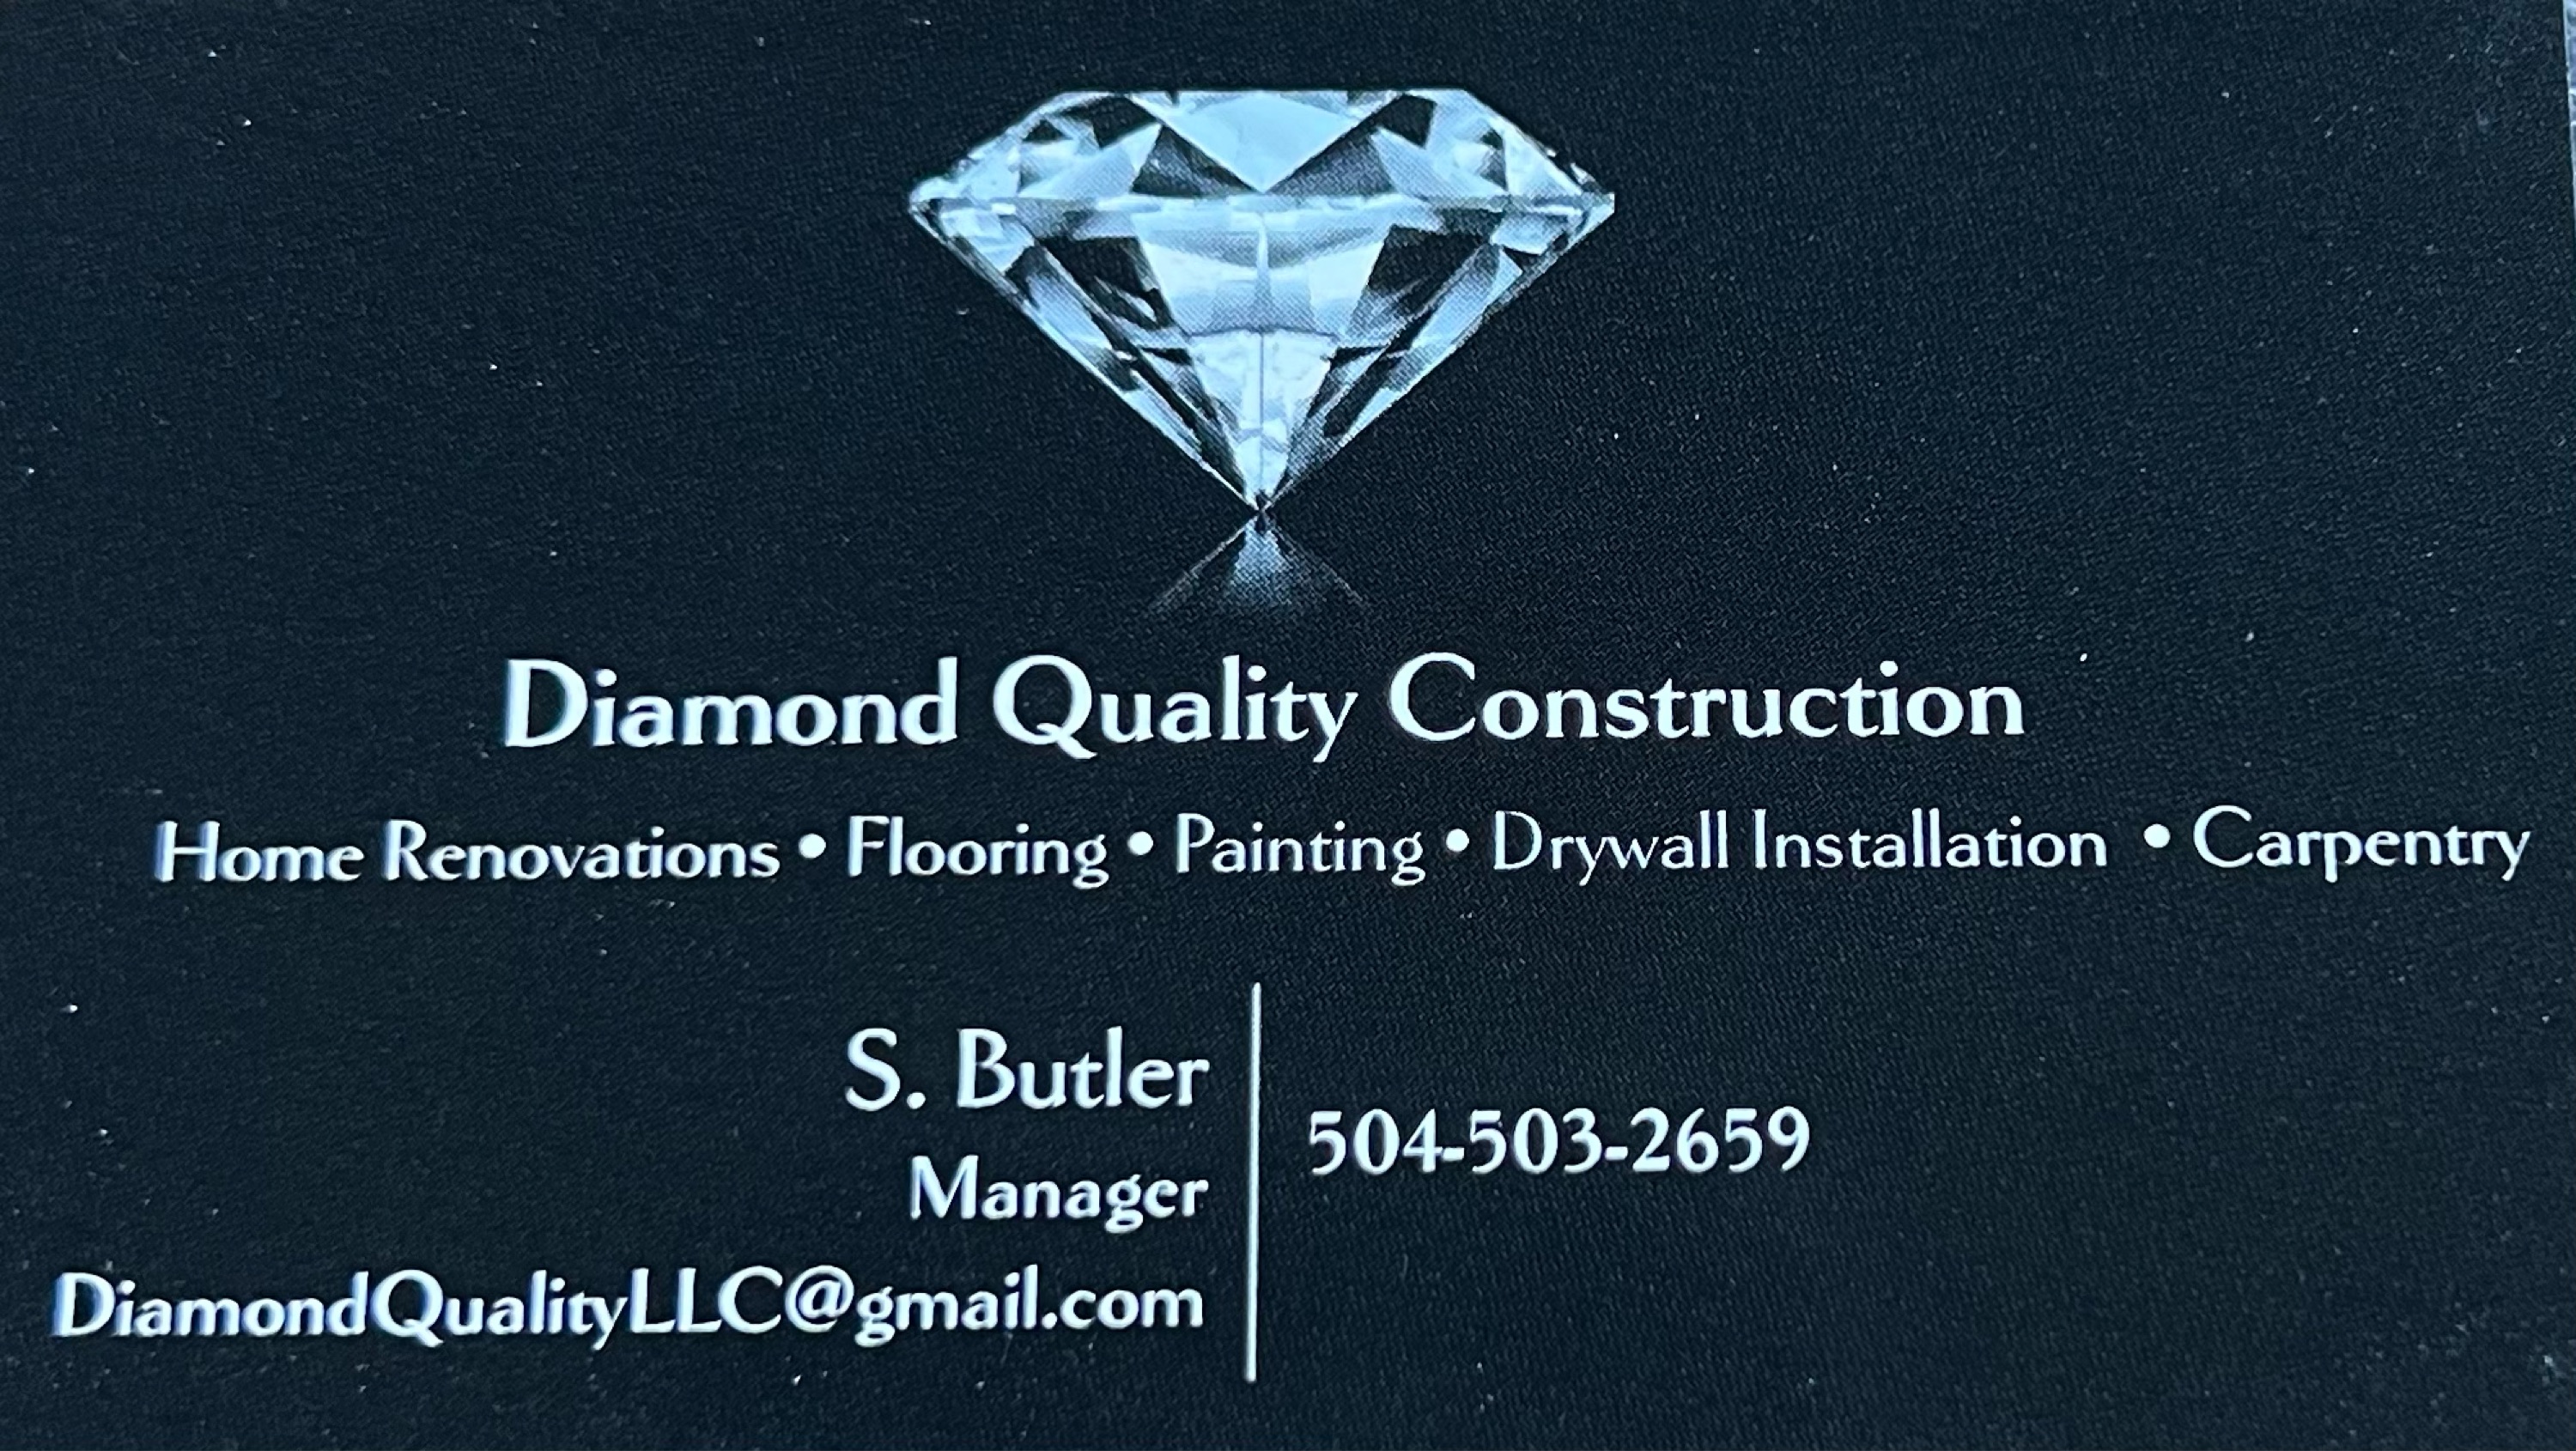 Diamond Quality Construction, LLC Logo